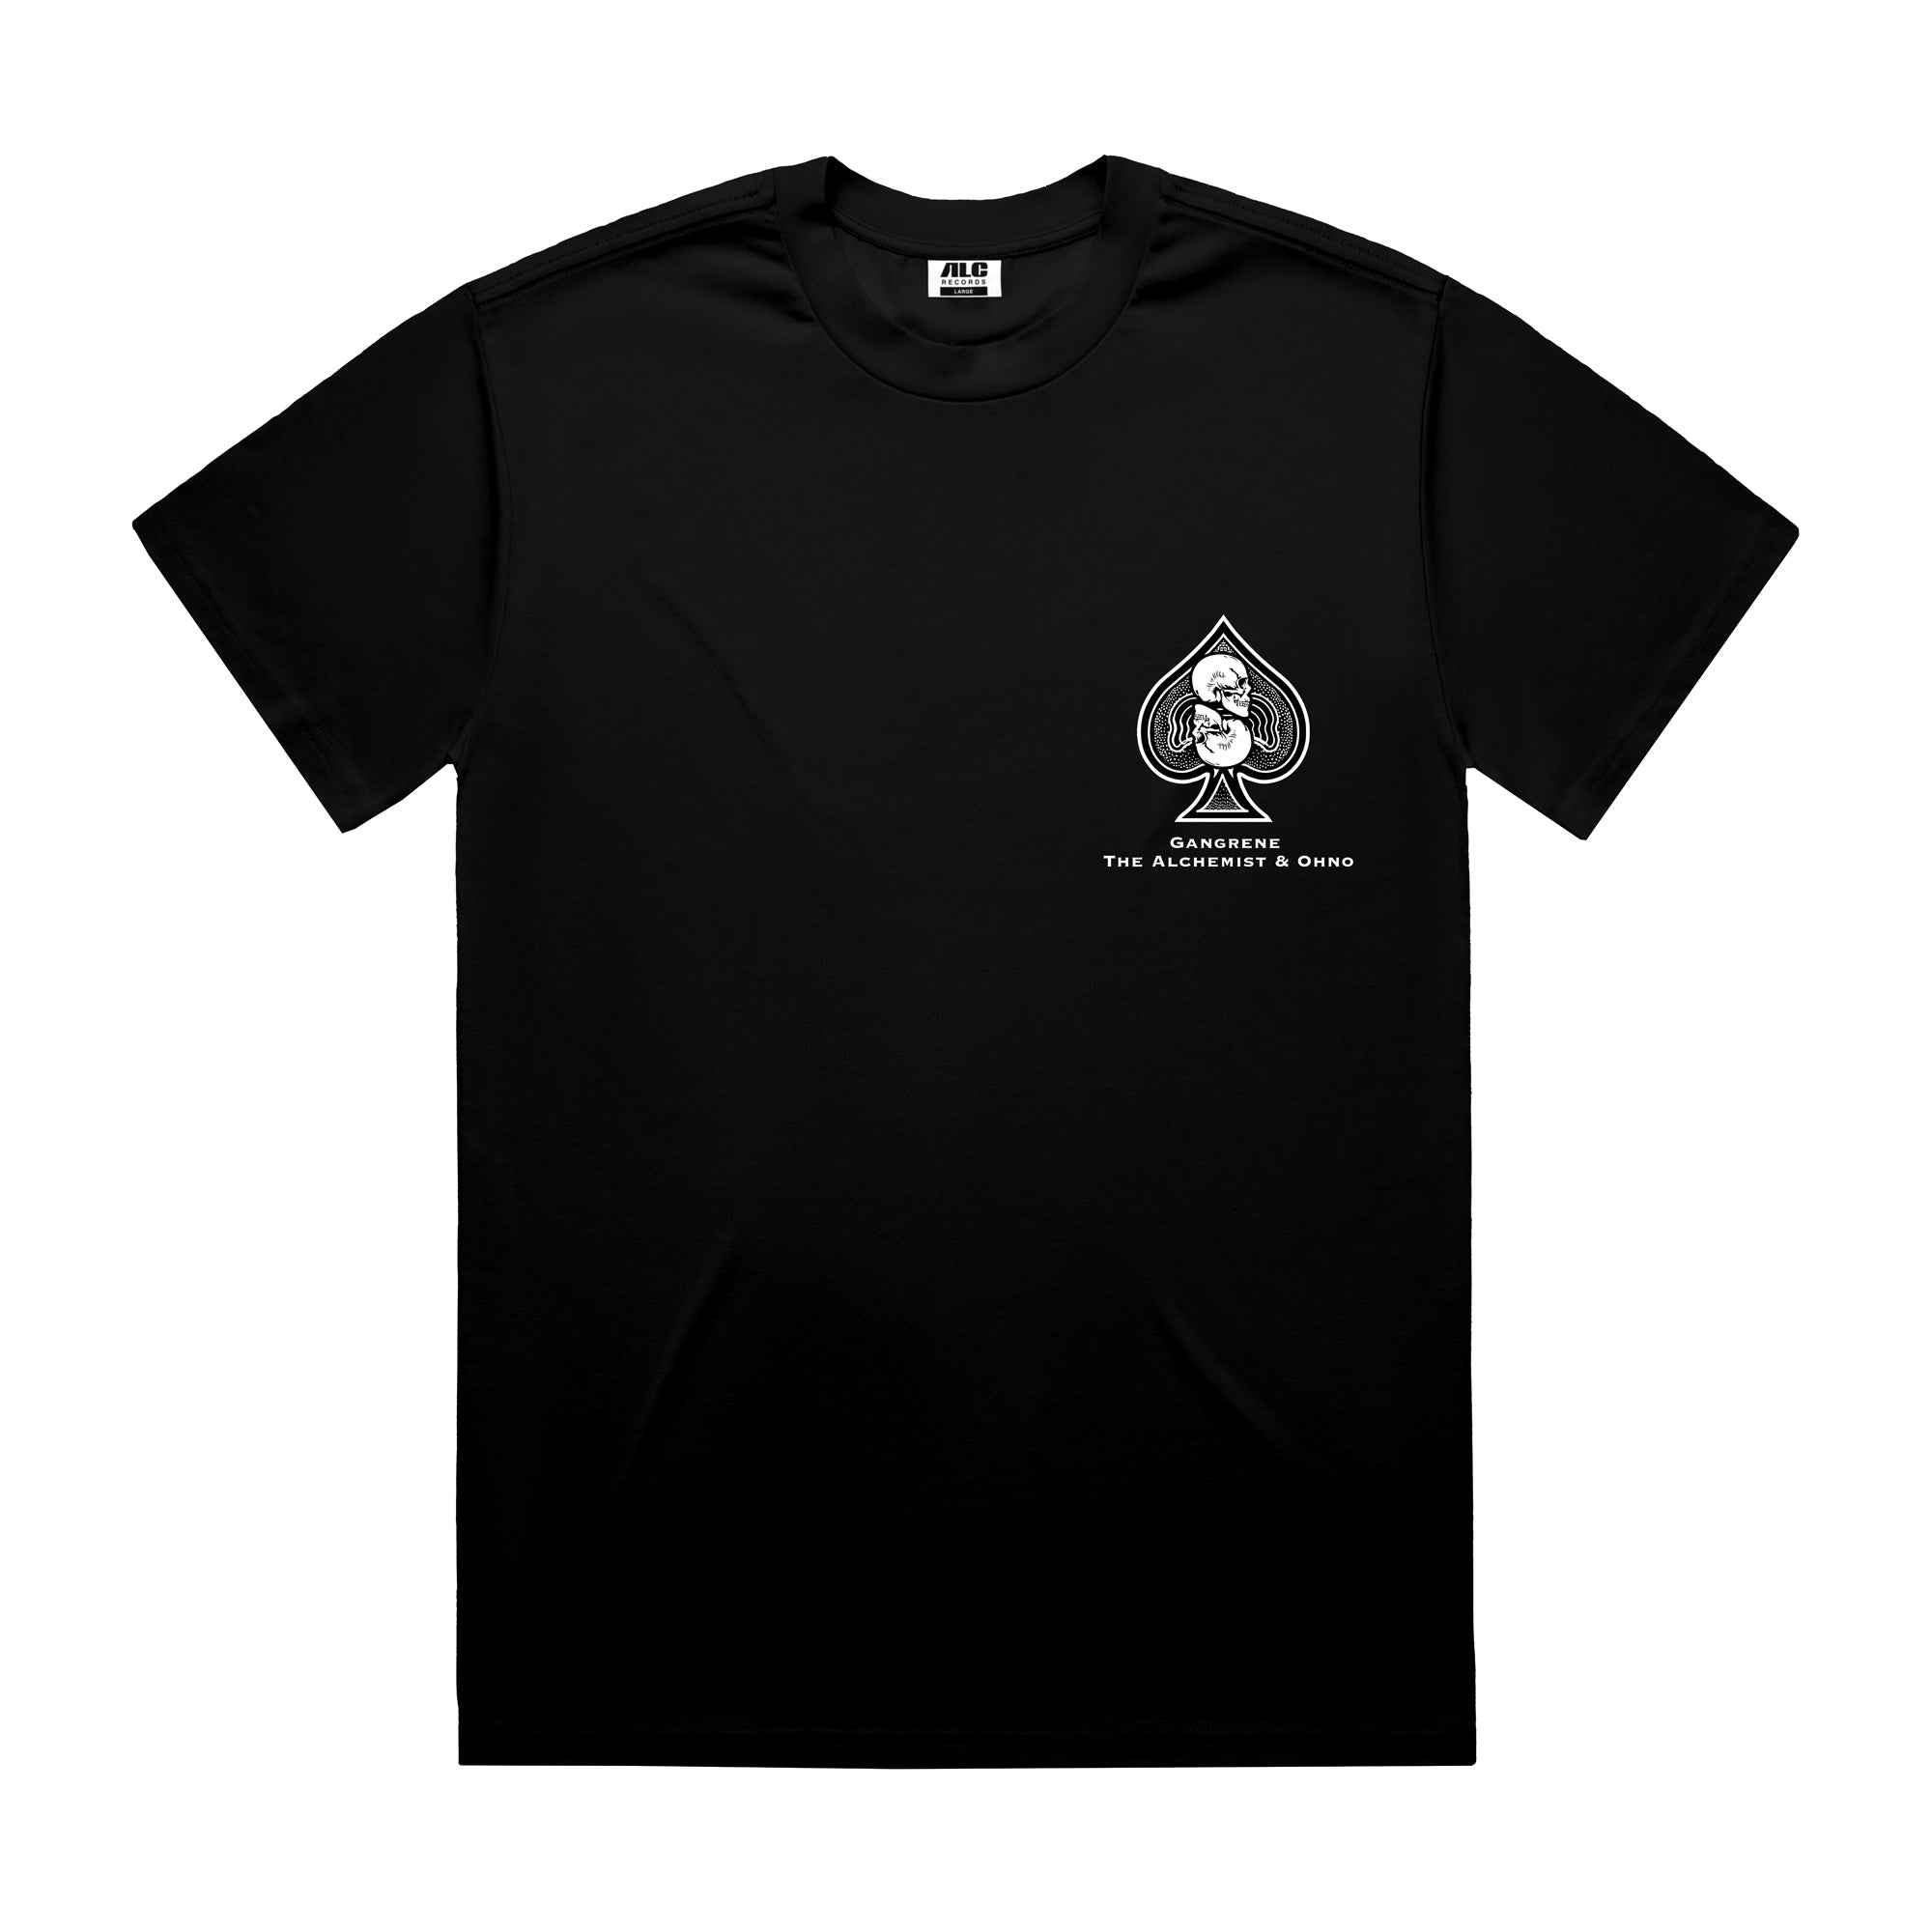 Stacked Deck (Black Shirt) - XL